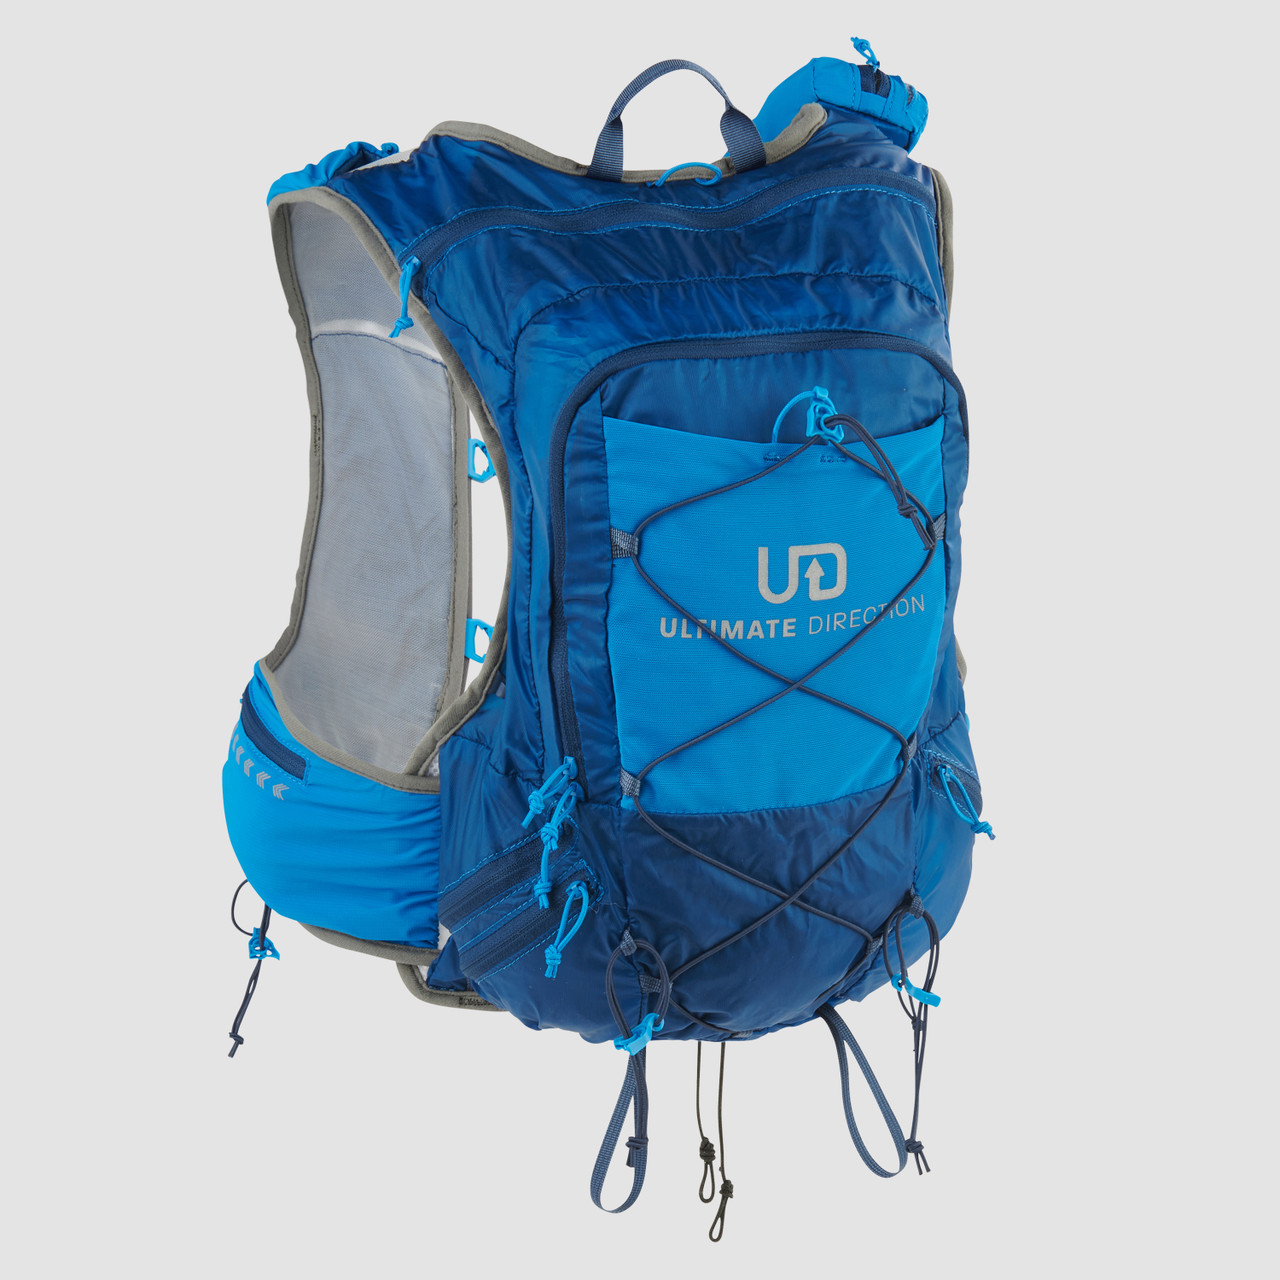 Ultimate Direction Adventure Vest 6.0 in Blue Size Medium